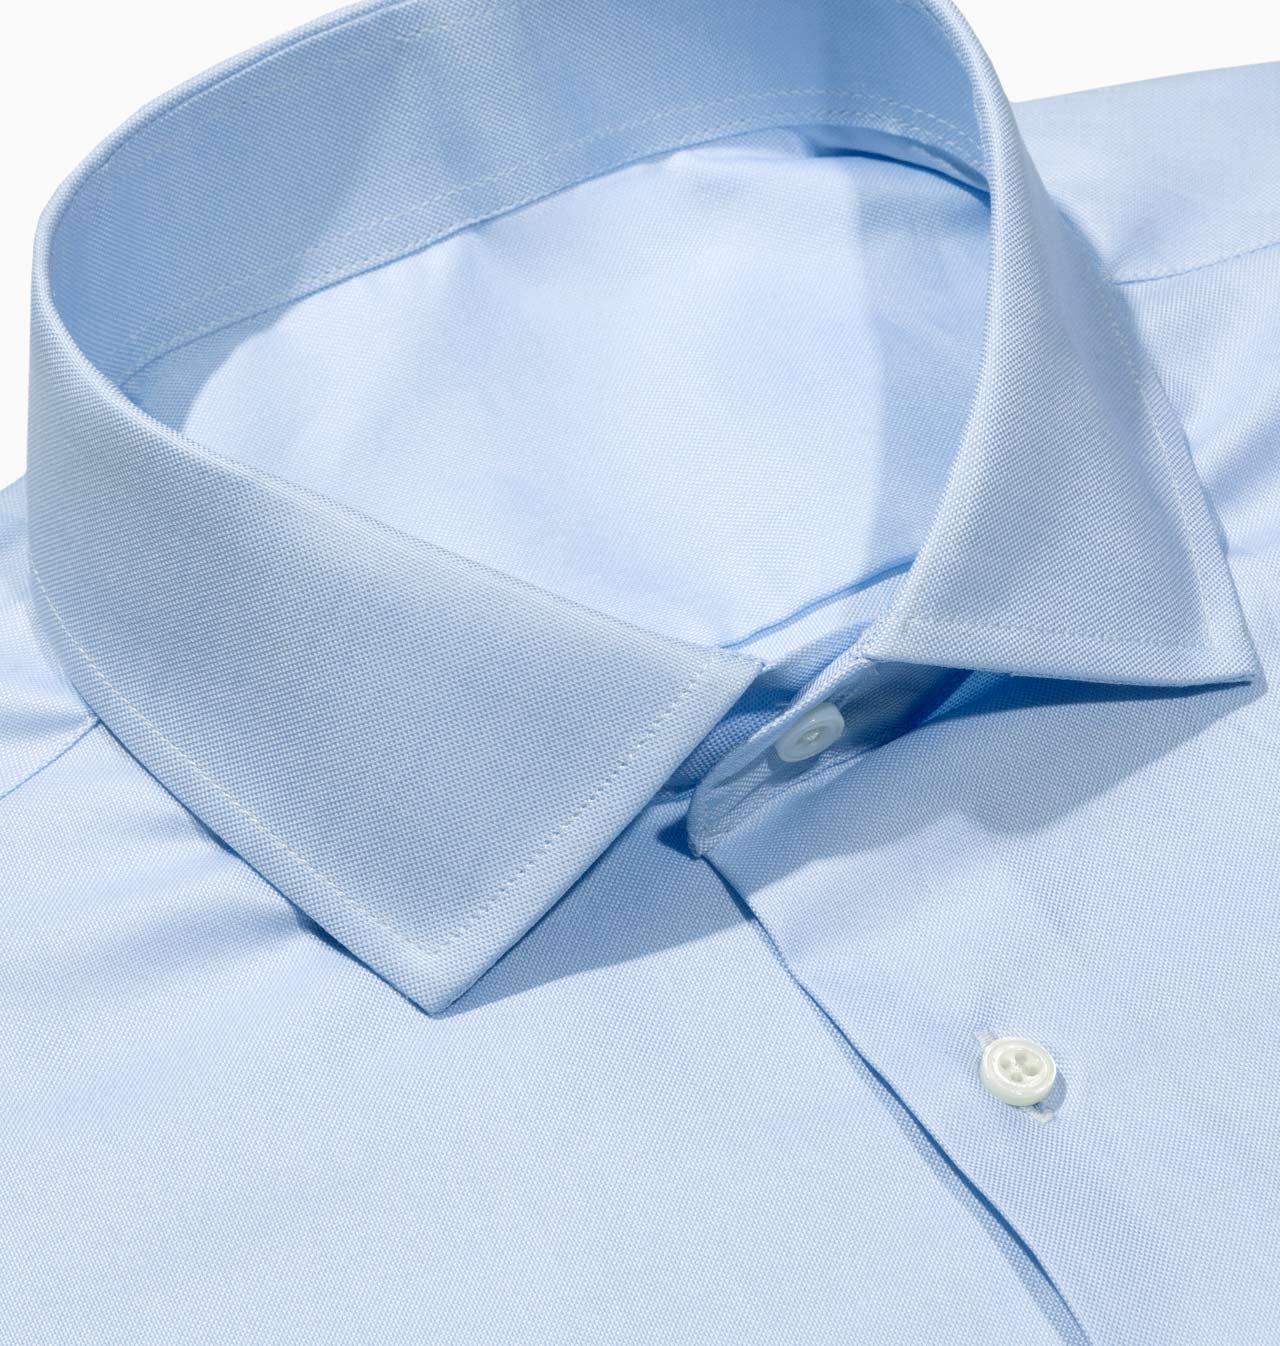 Men’s Tailored Light Blue Royal Oxford Dress Shirt